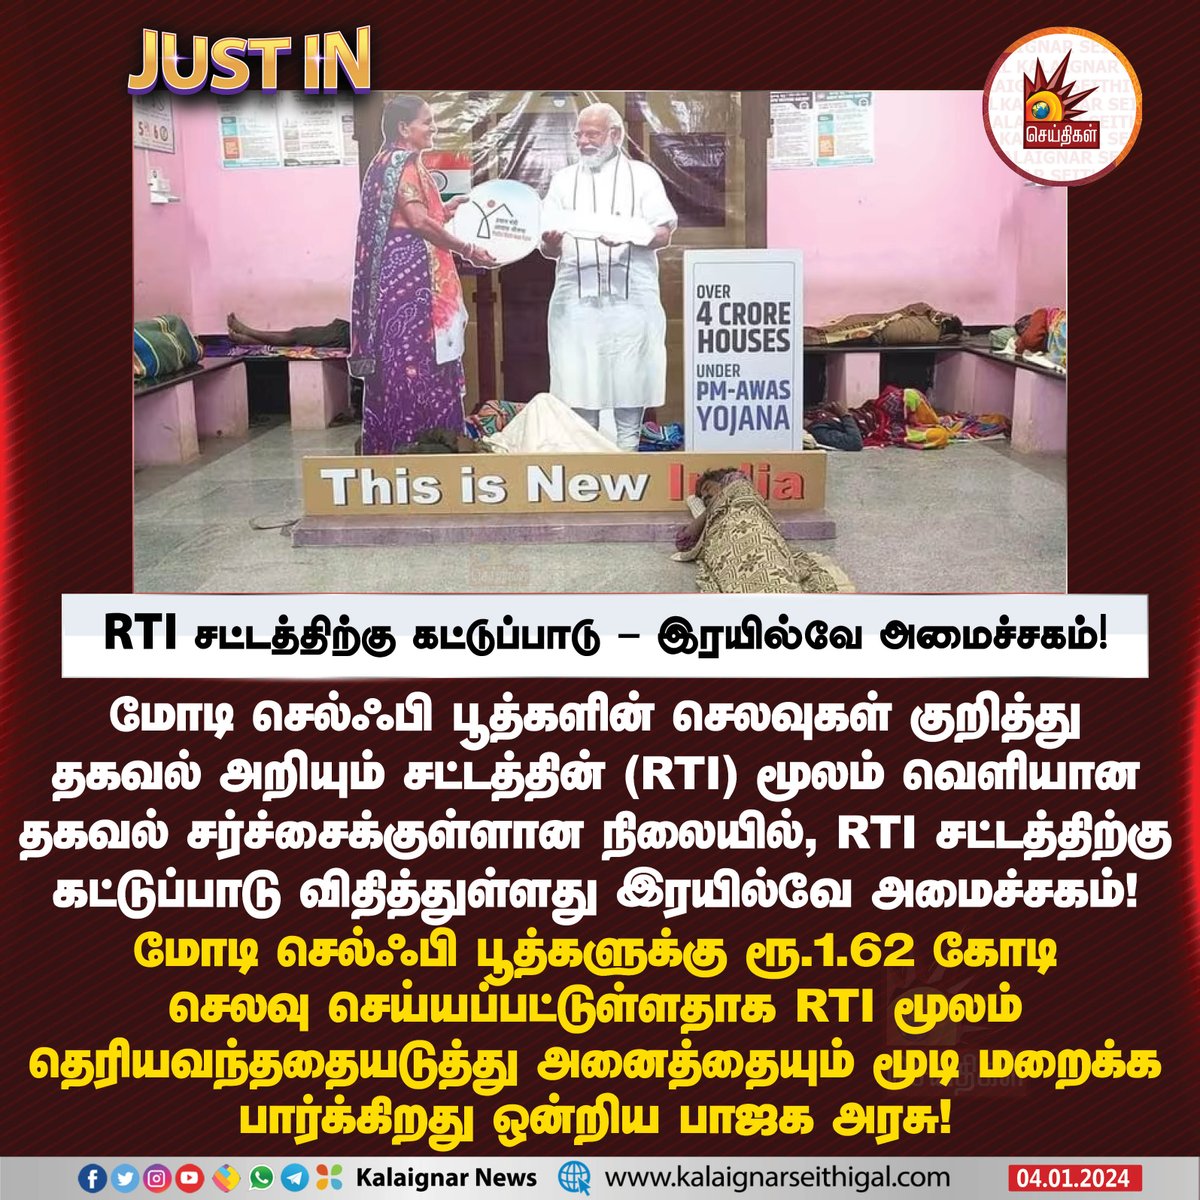 RTI சட்டத்திற்கு கட்டுப்பாடு - இரயில்வே அமைச்சகம்!

#RTI #ModiSelfiePoint #RailwayDepartment #BJP #KalaignarSeithigal